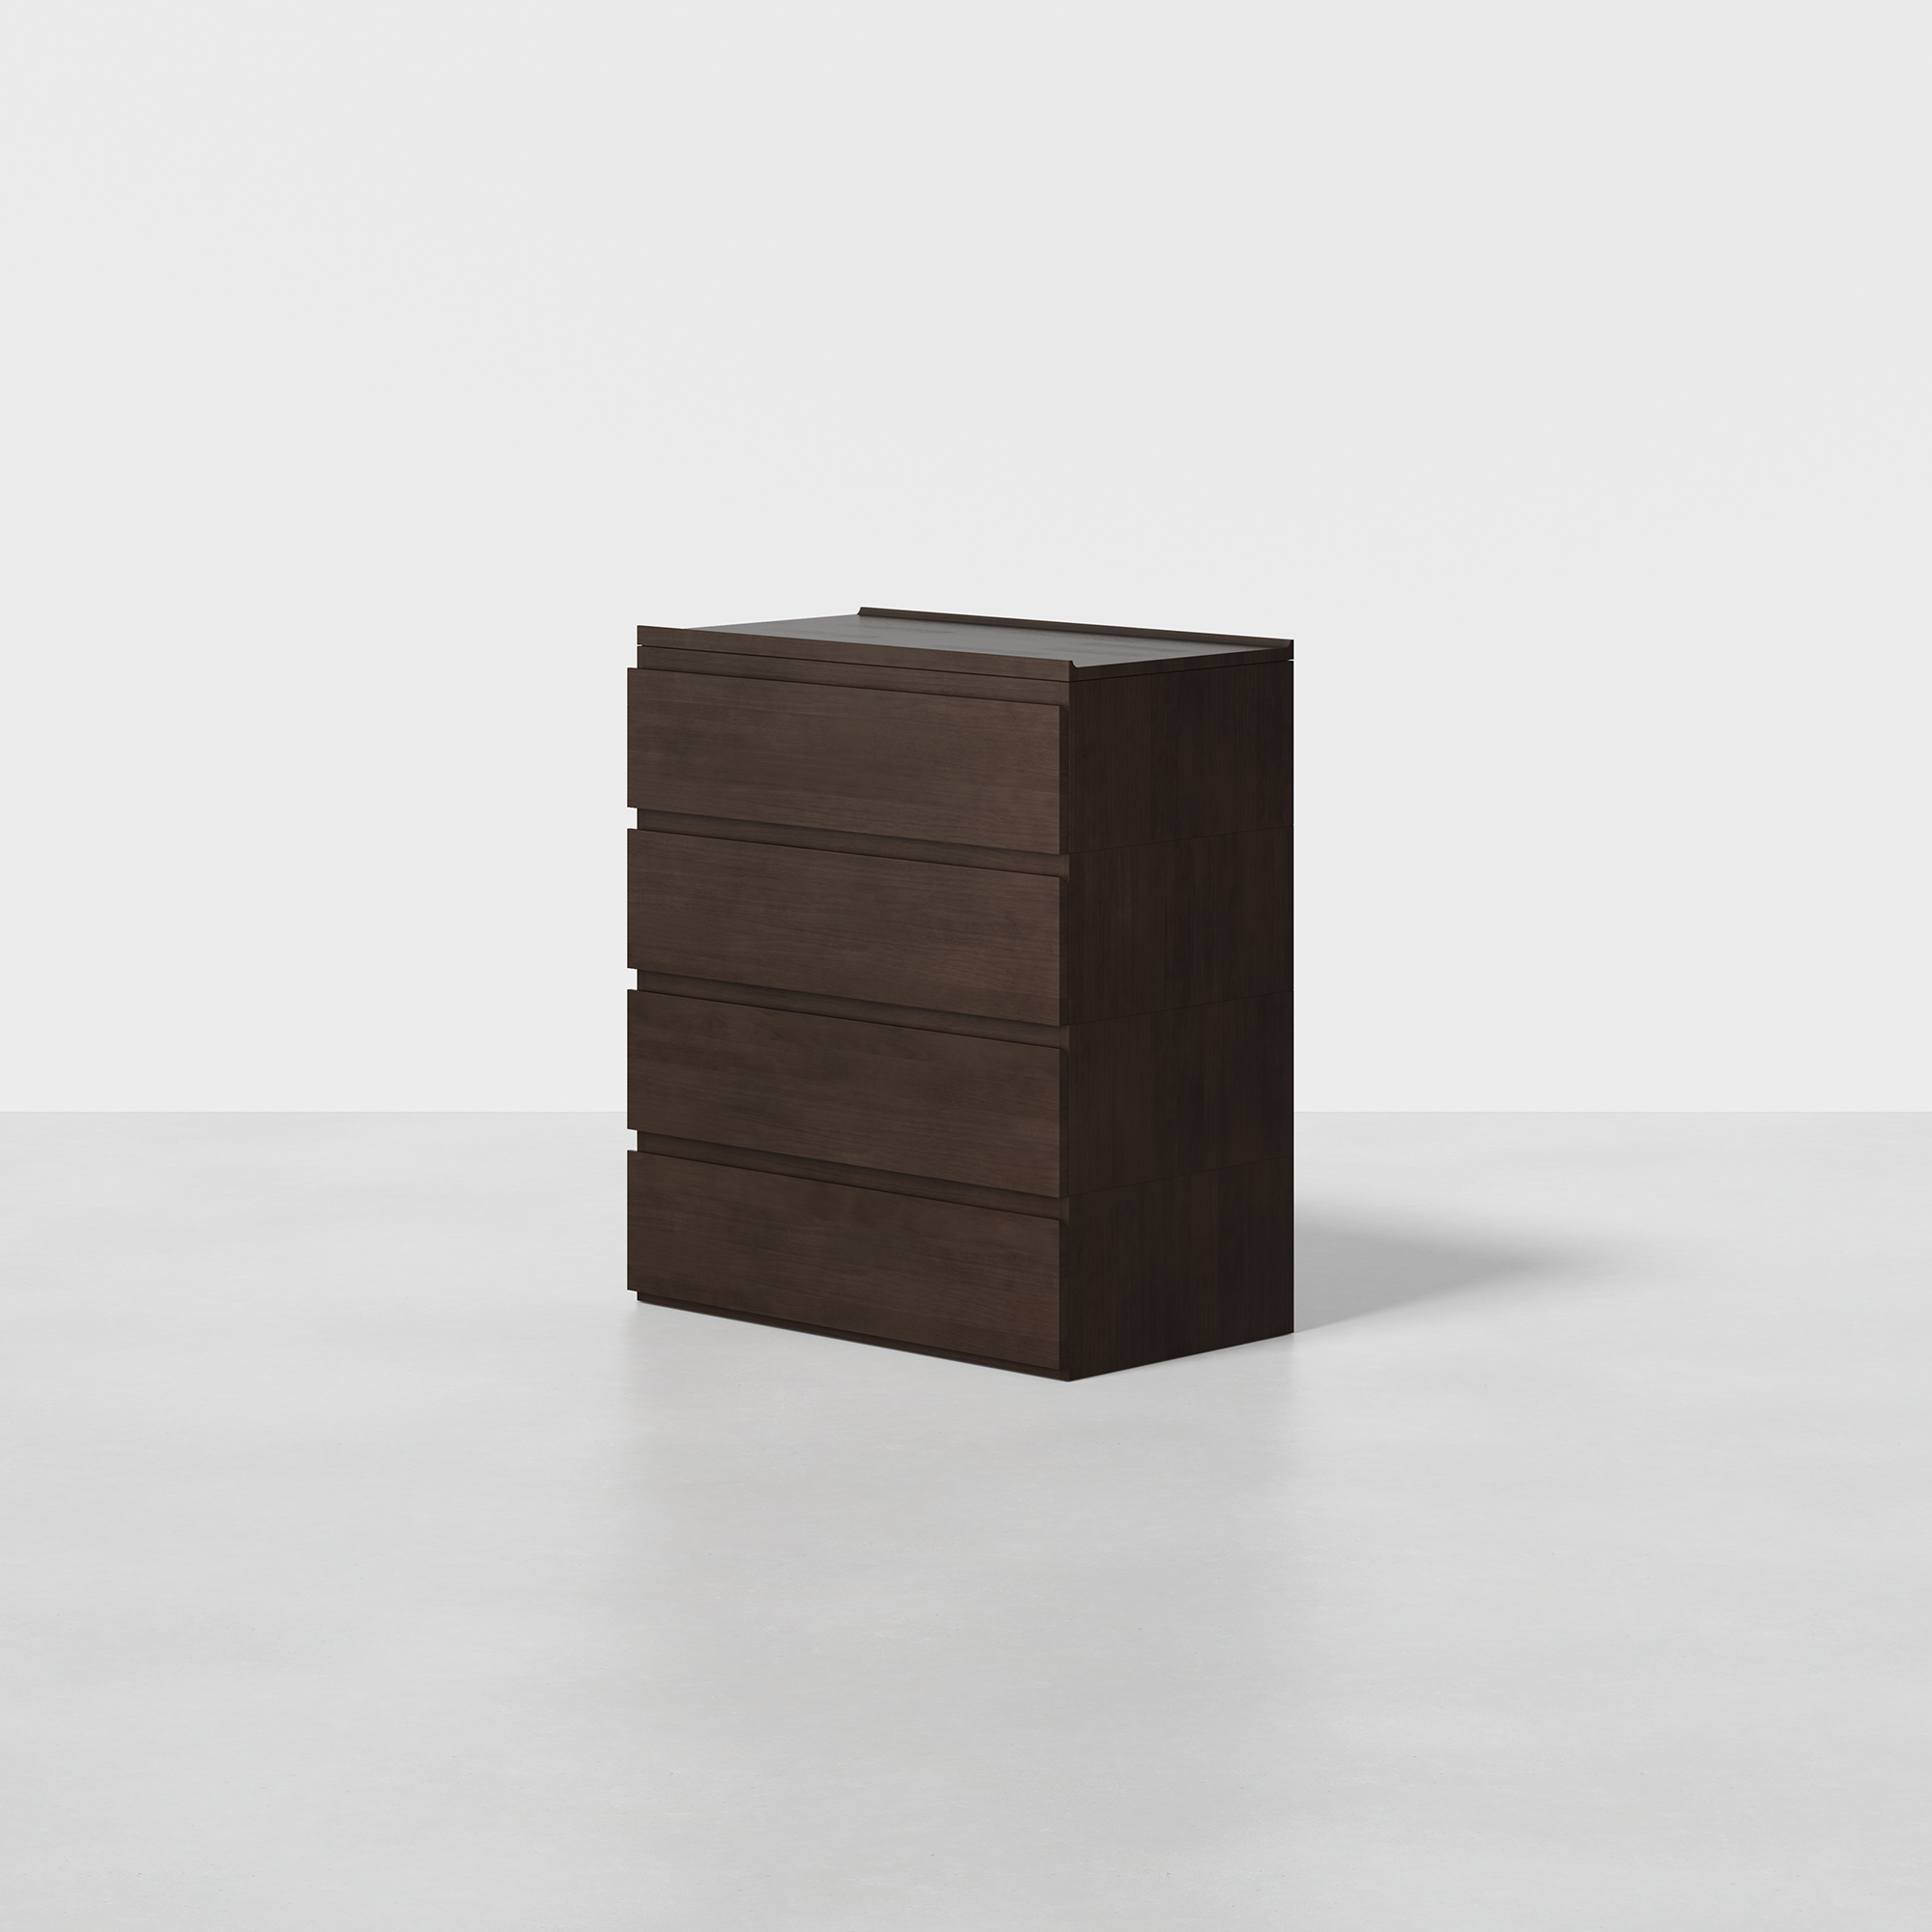 PDP Image: The Dresser (4x1 - Espresso) - Render - Angled